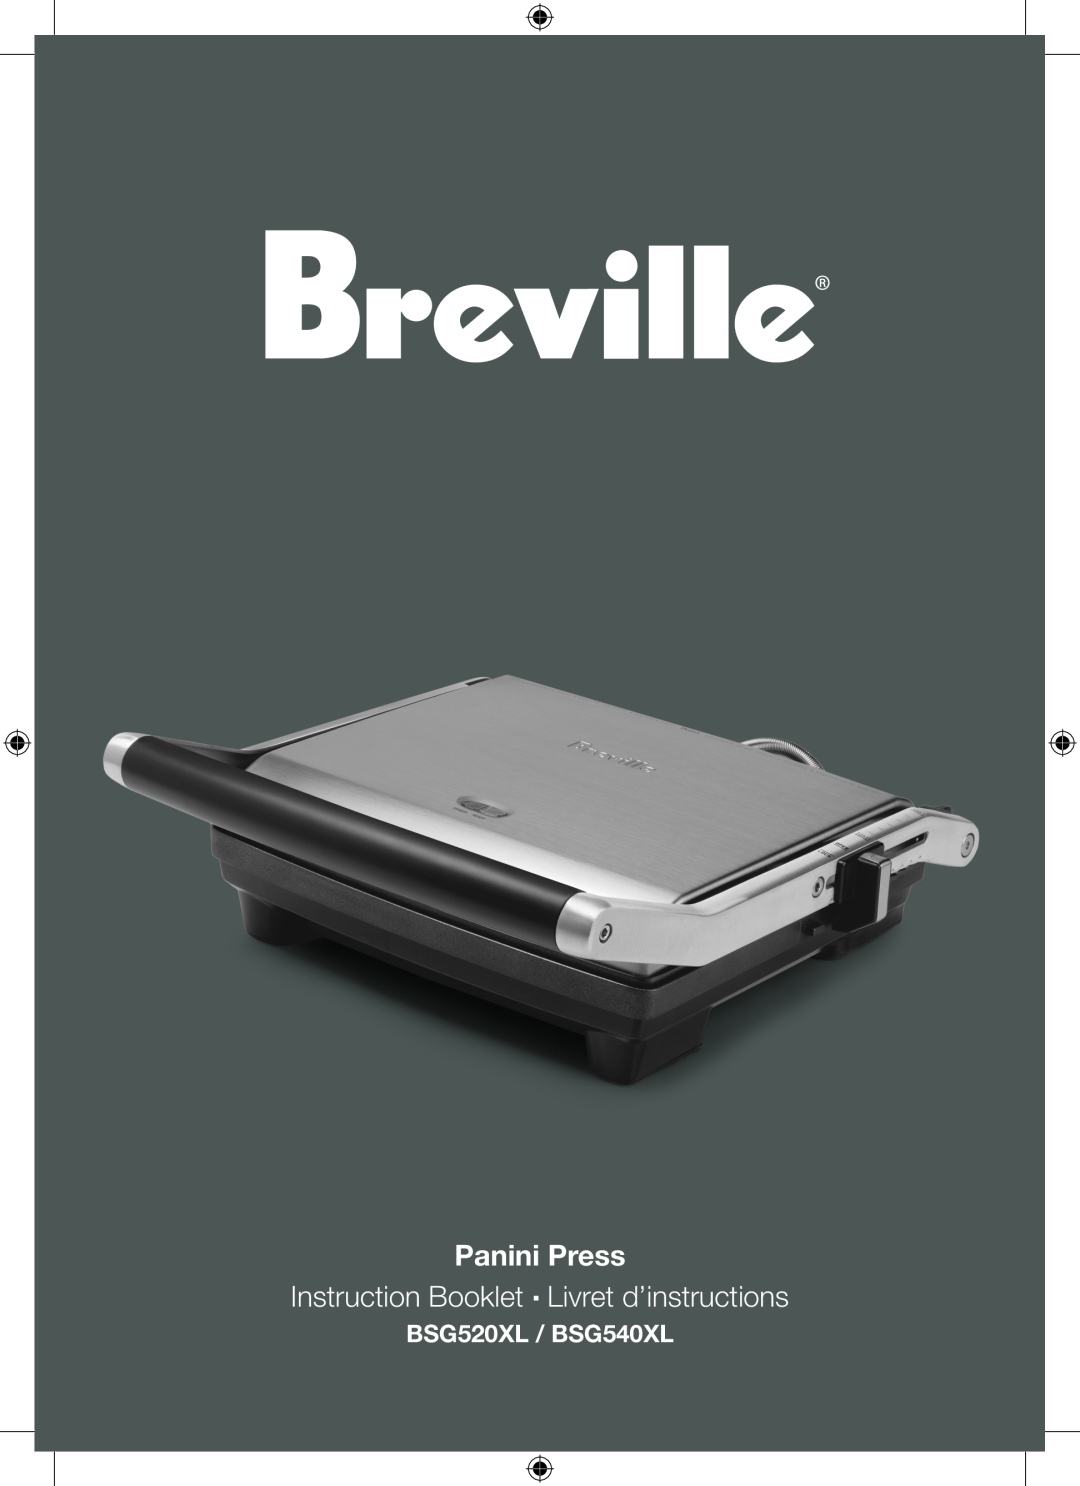 Breville manual Panini Press, Instruction Booklet Livret d’instructions, BSG520XL / BSG540XL 